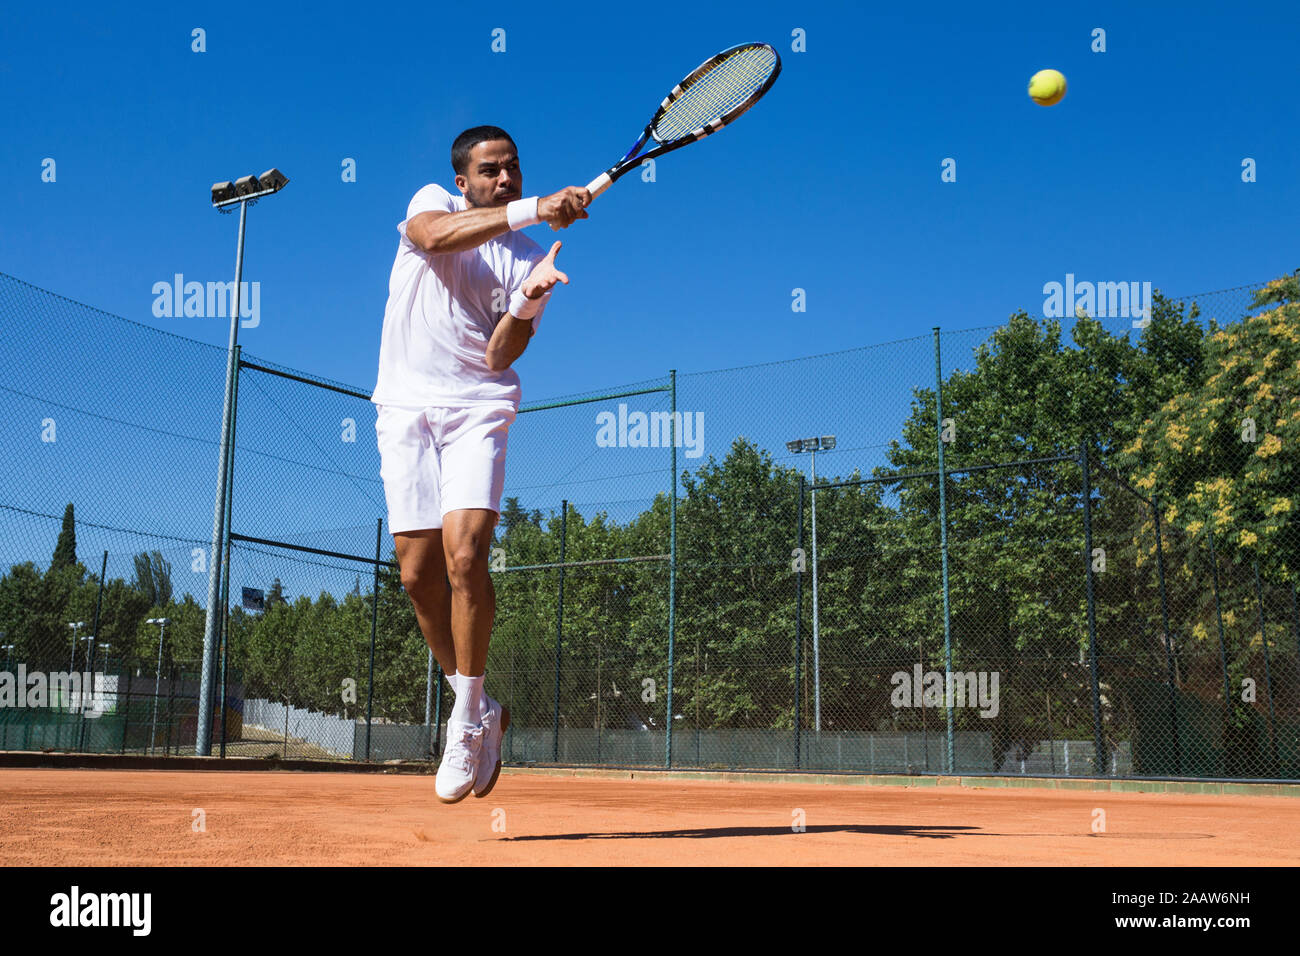 Tennis player during a tennis match Stock Photo